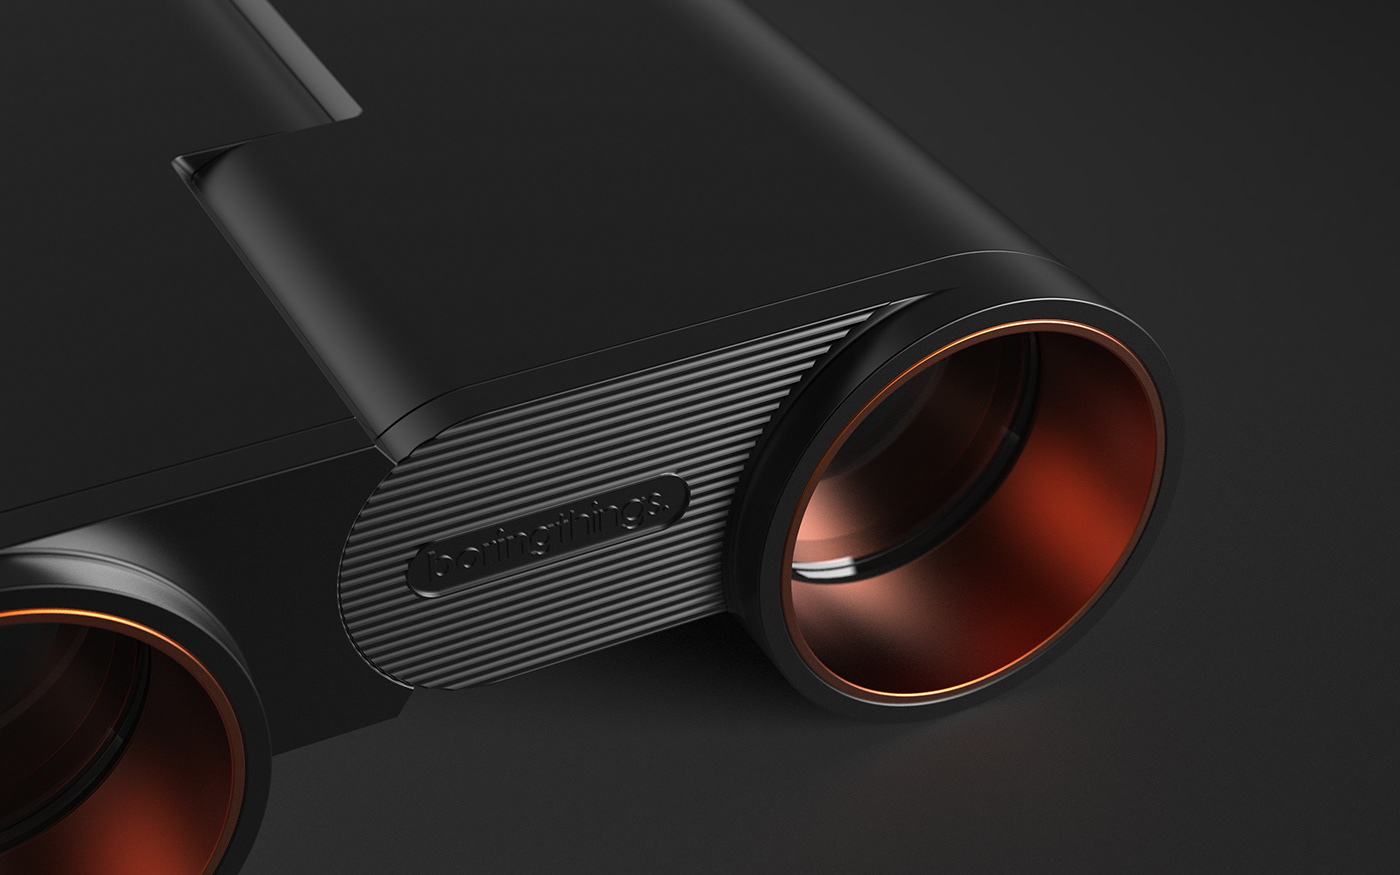 productdesign binoculars precision vision watch zoom darkgrey black cmf cad